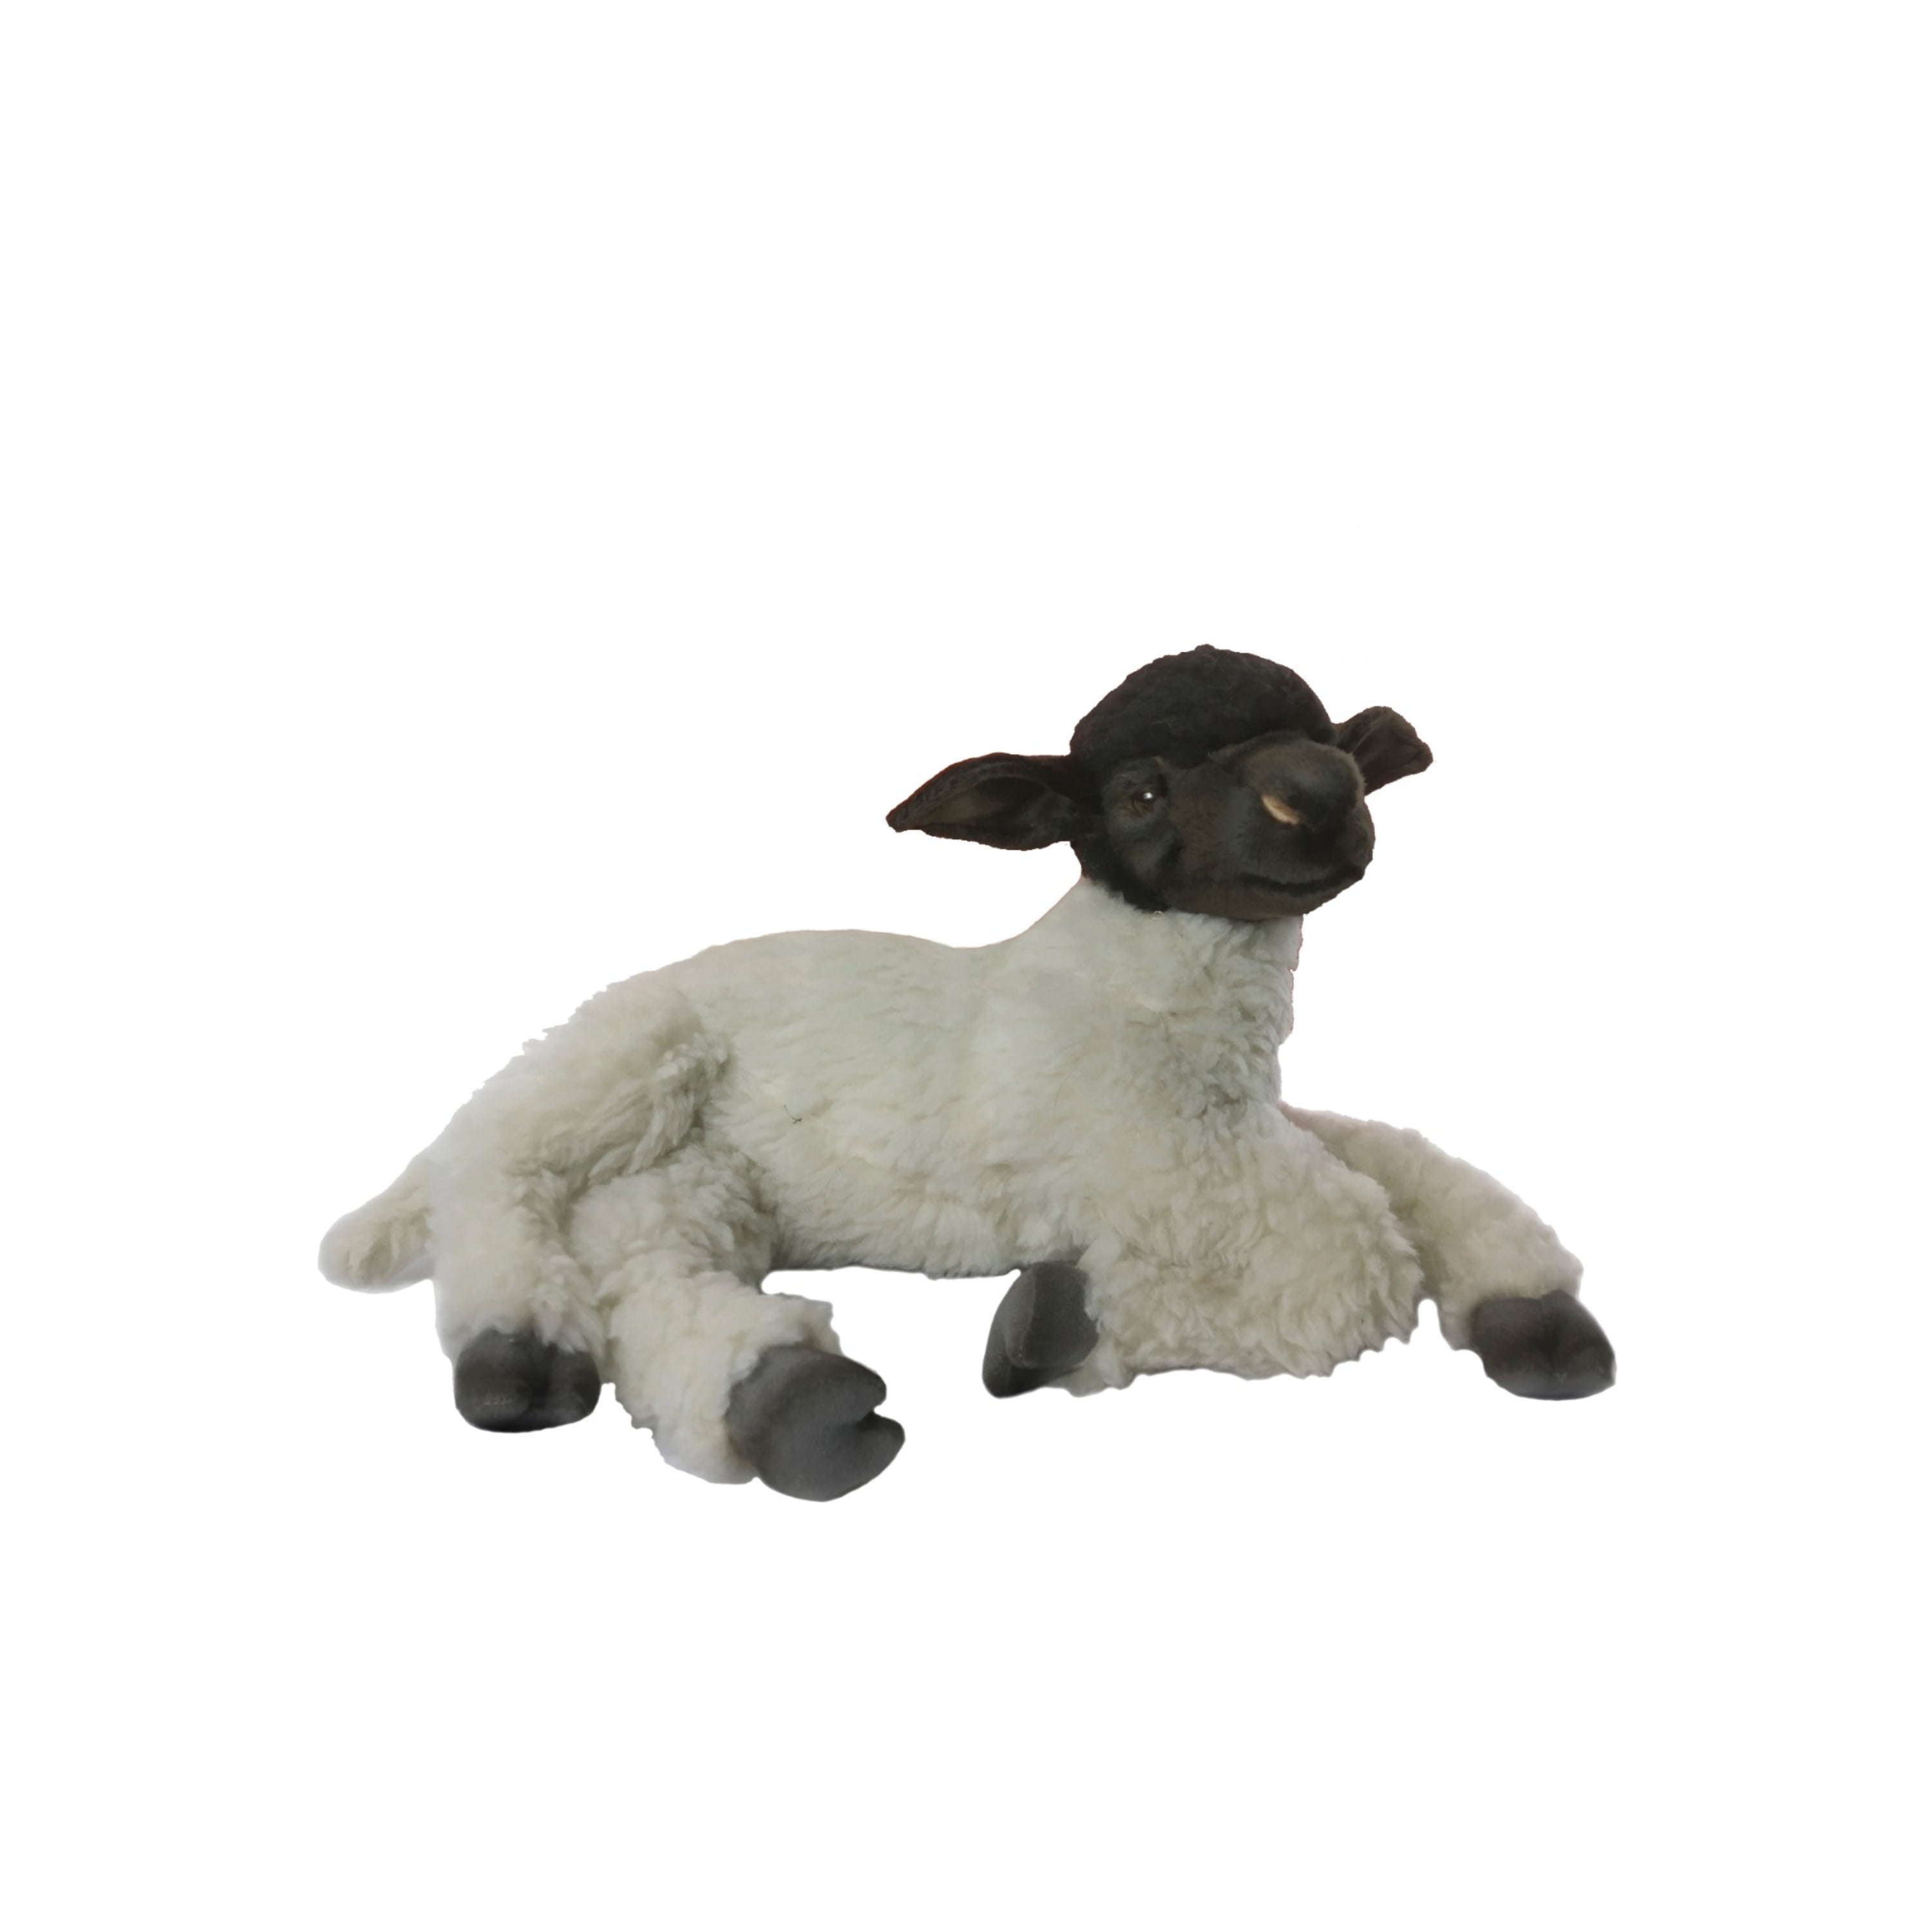 8" Black Face Sheep Plush Stuffed Animal Toy 31376 